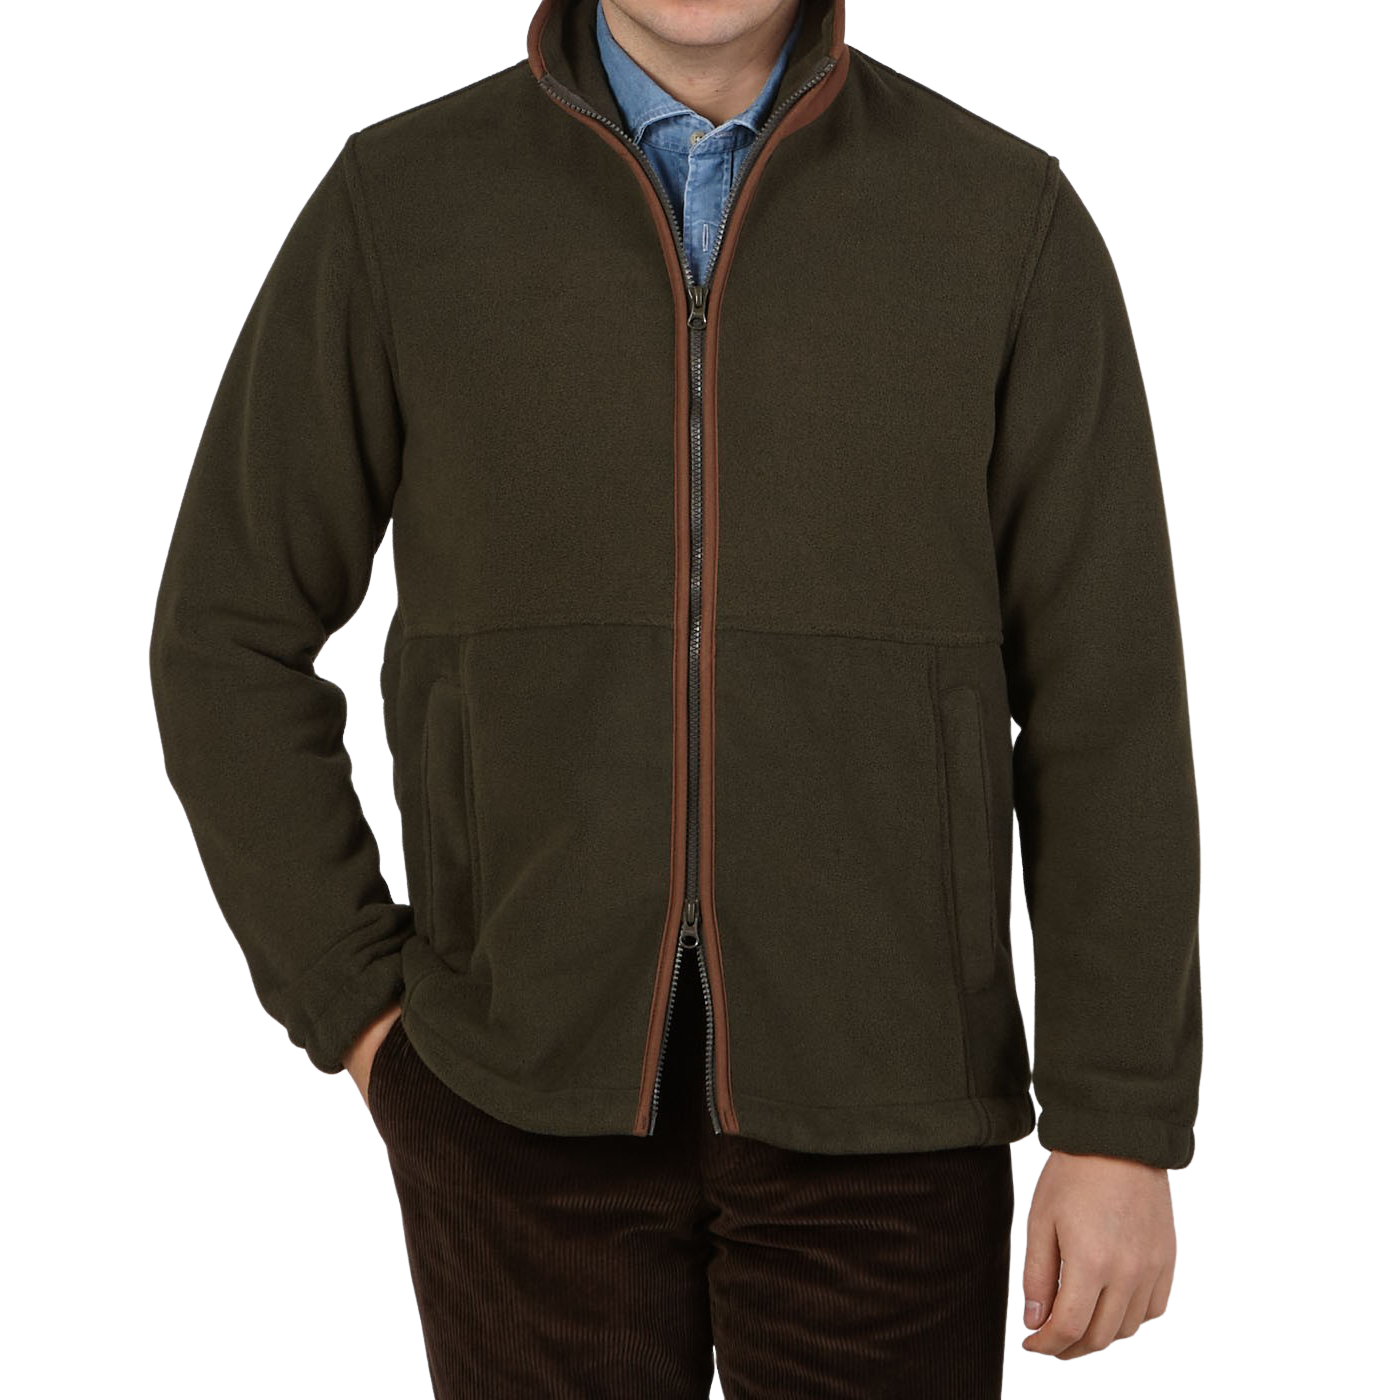 Alan Paine Moss Green Fleece Aylsham Jacket Front